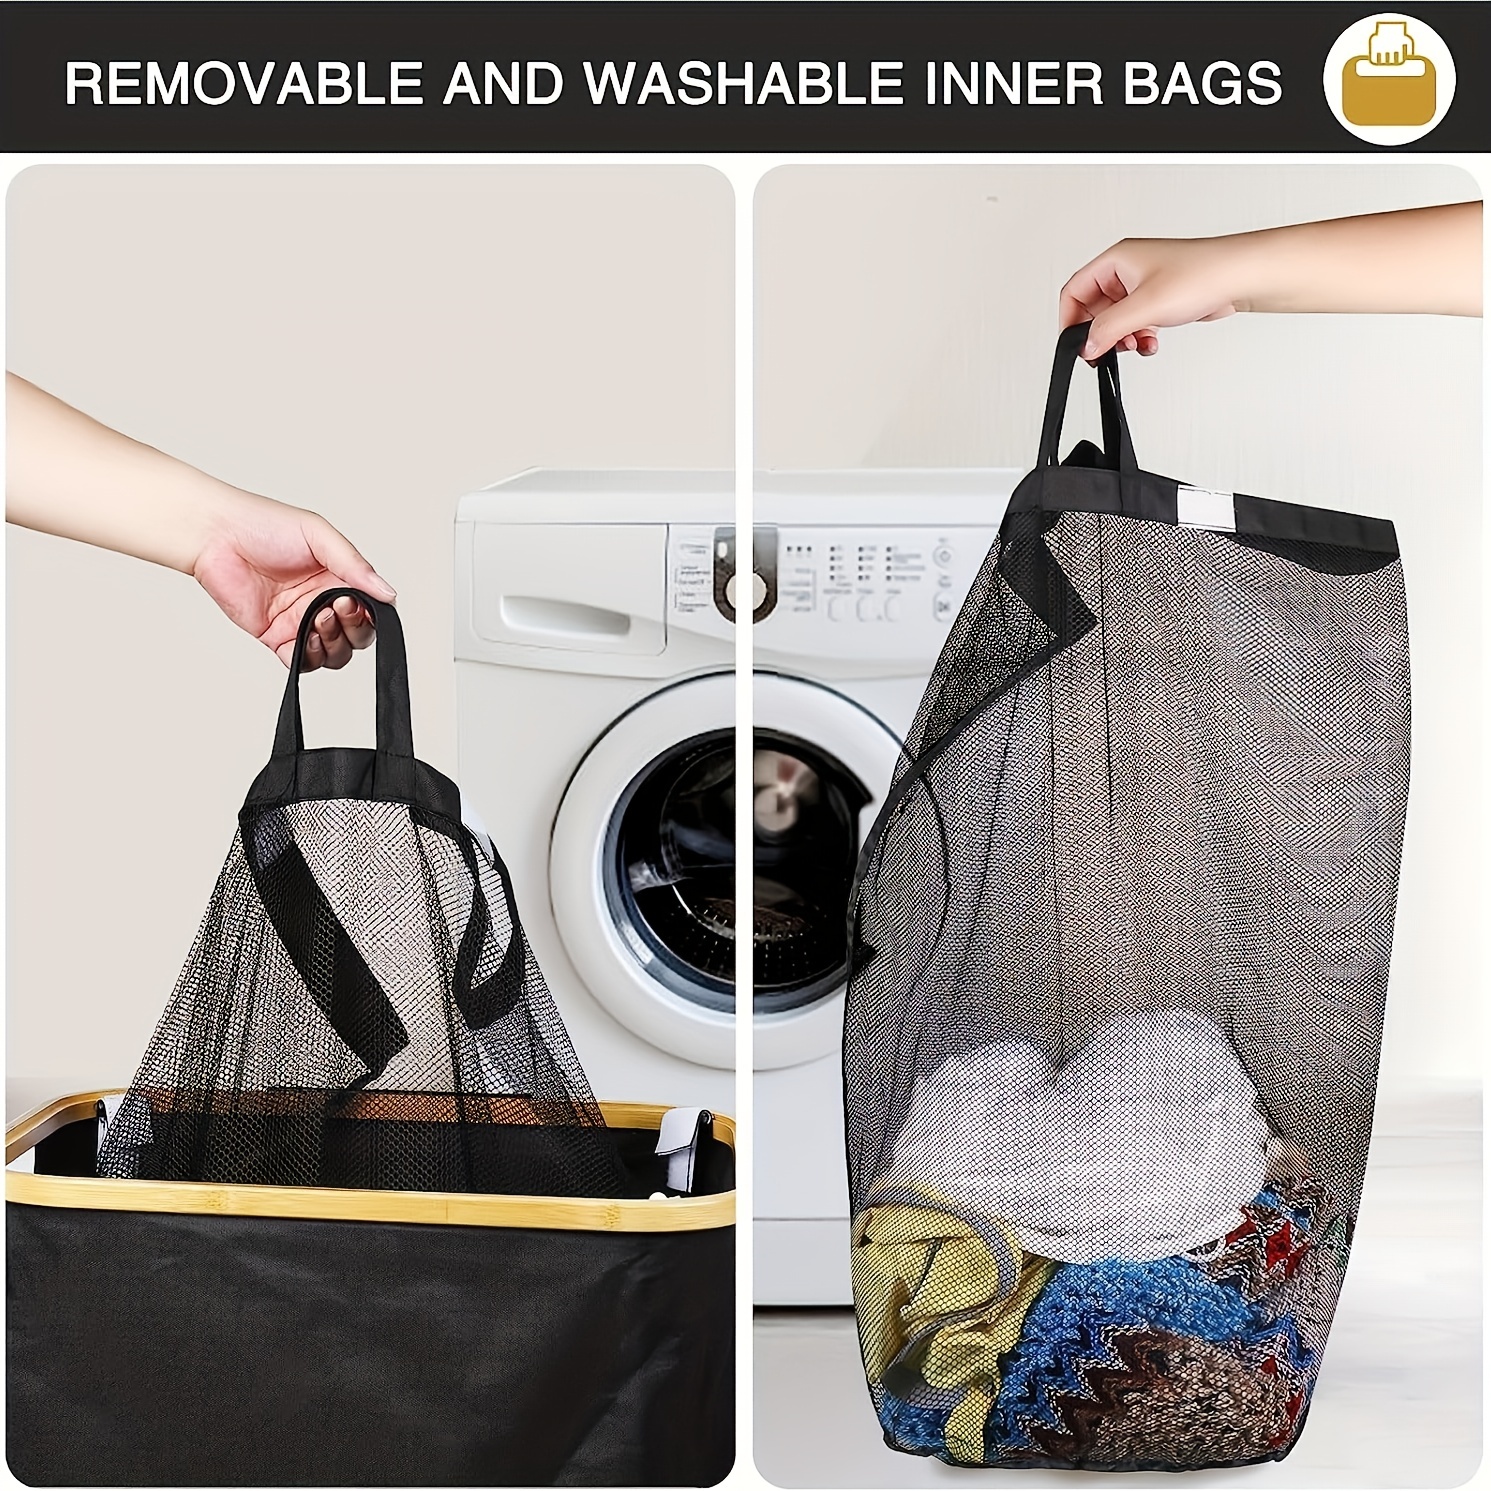 Laundry baskets, bags & bins